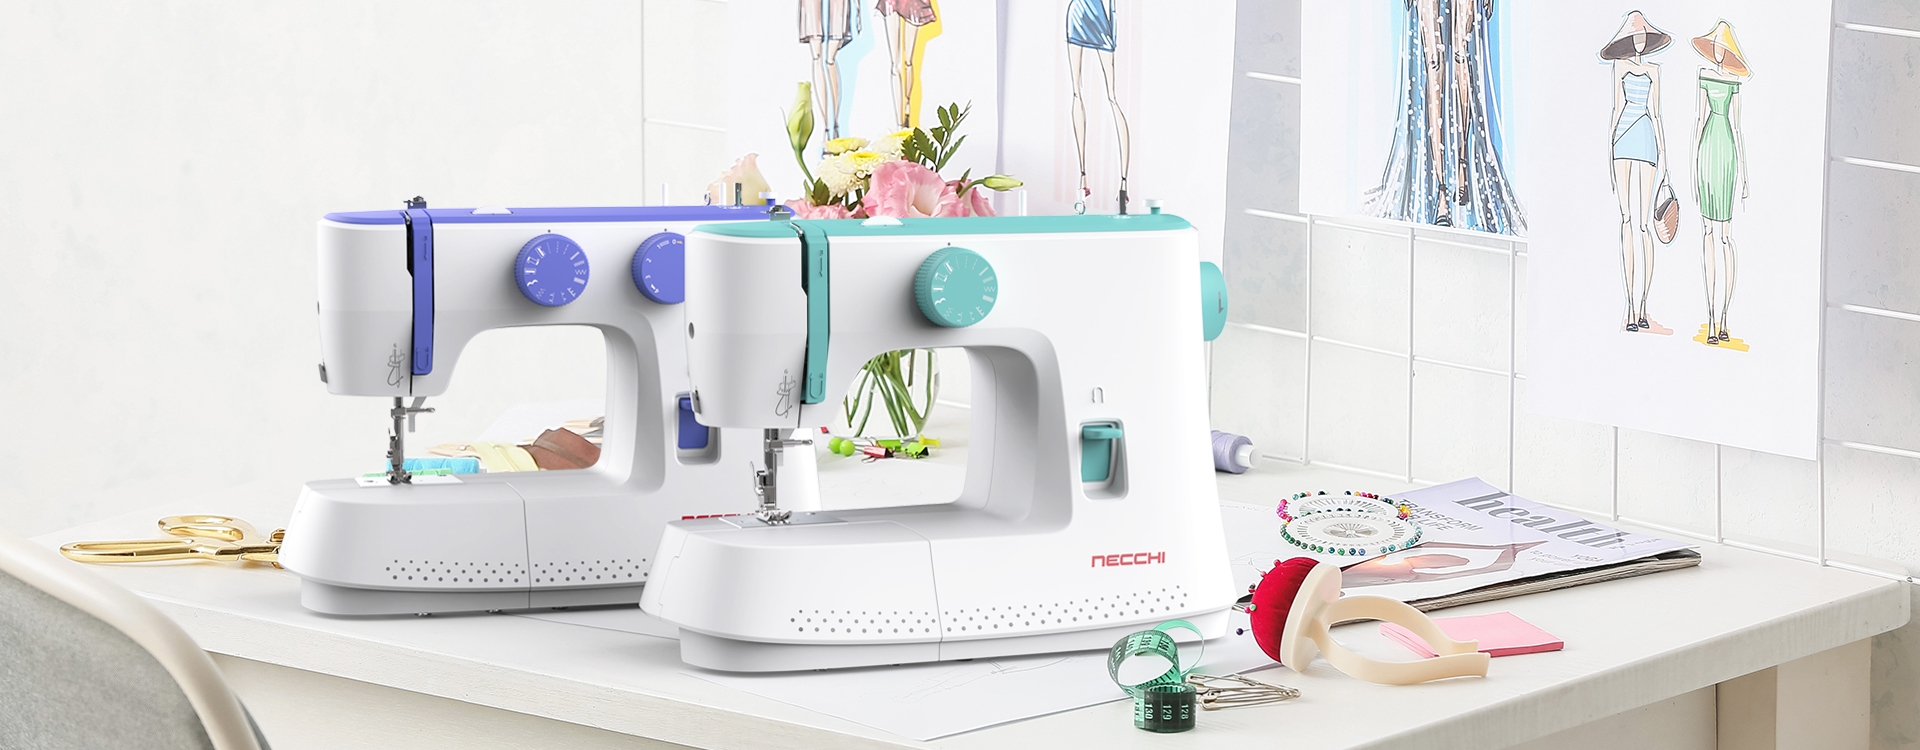 Necchi M series sewing machine